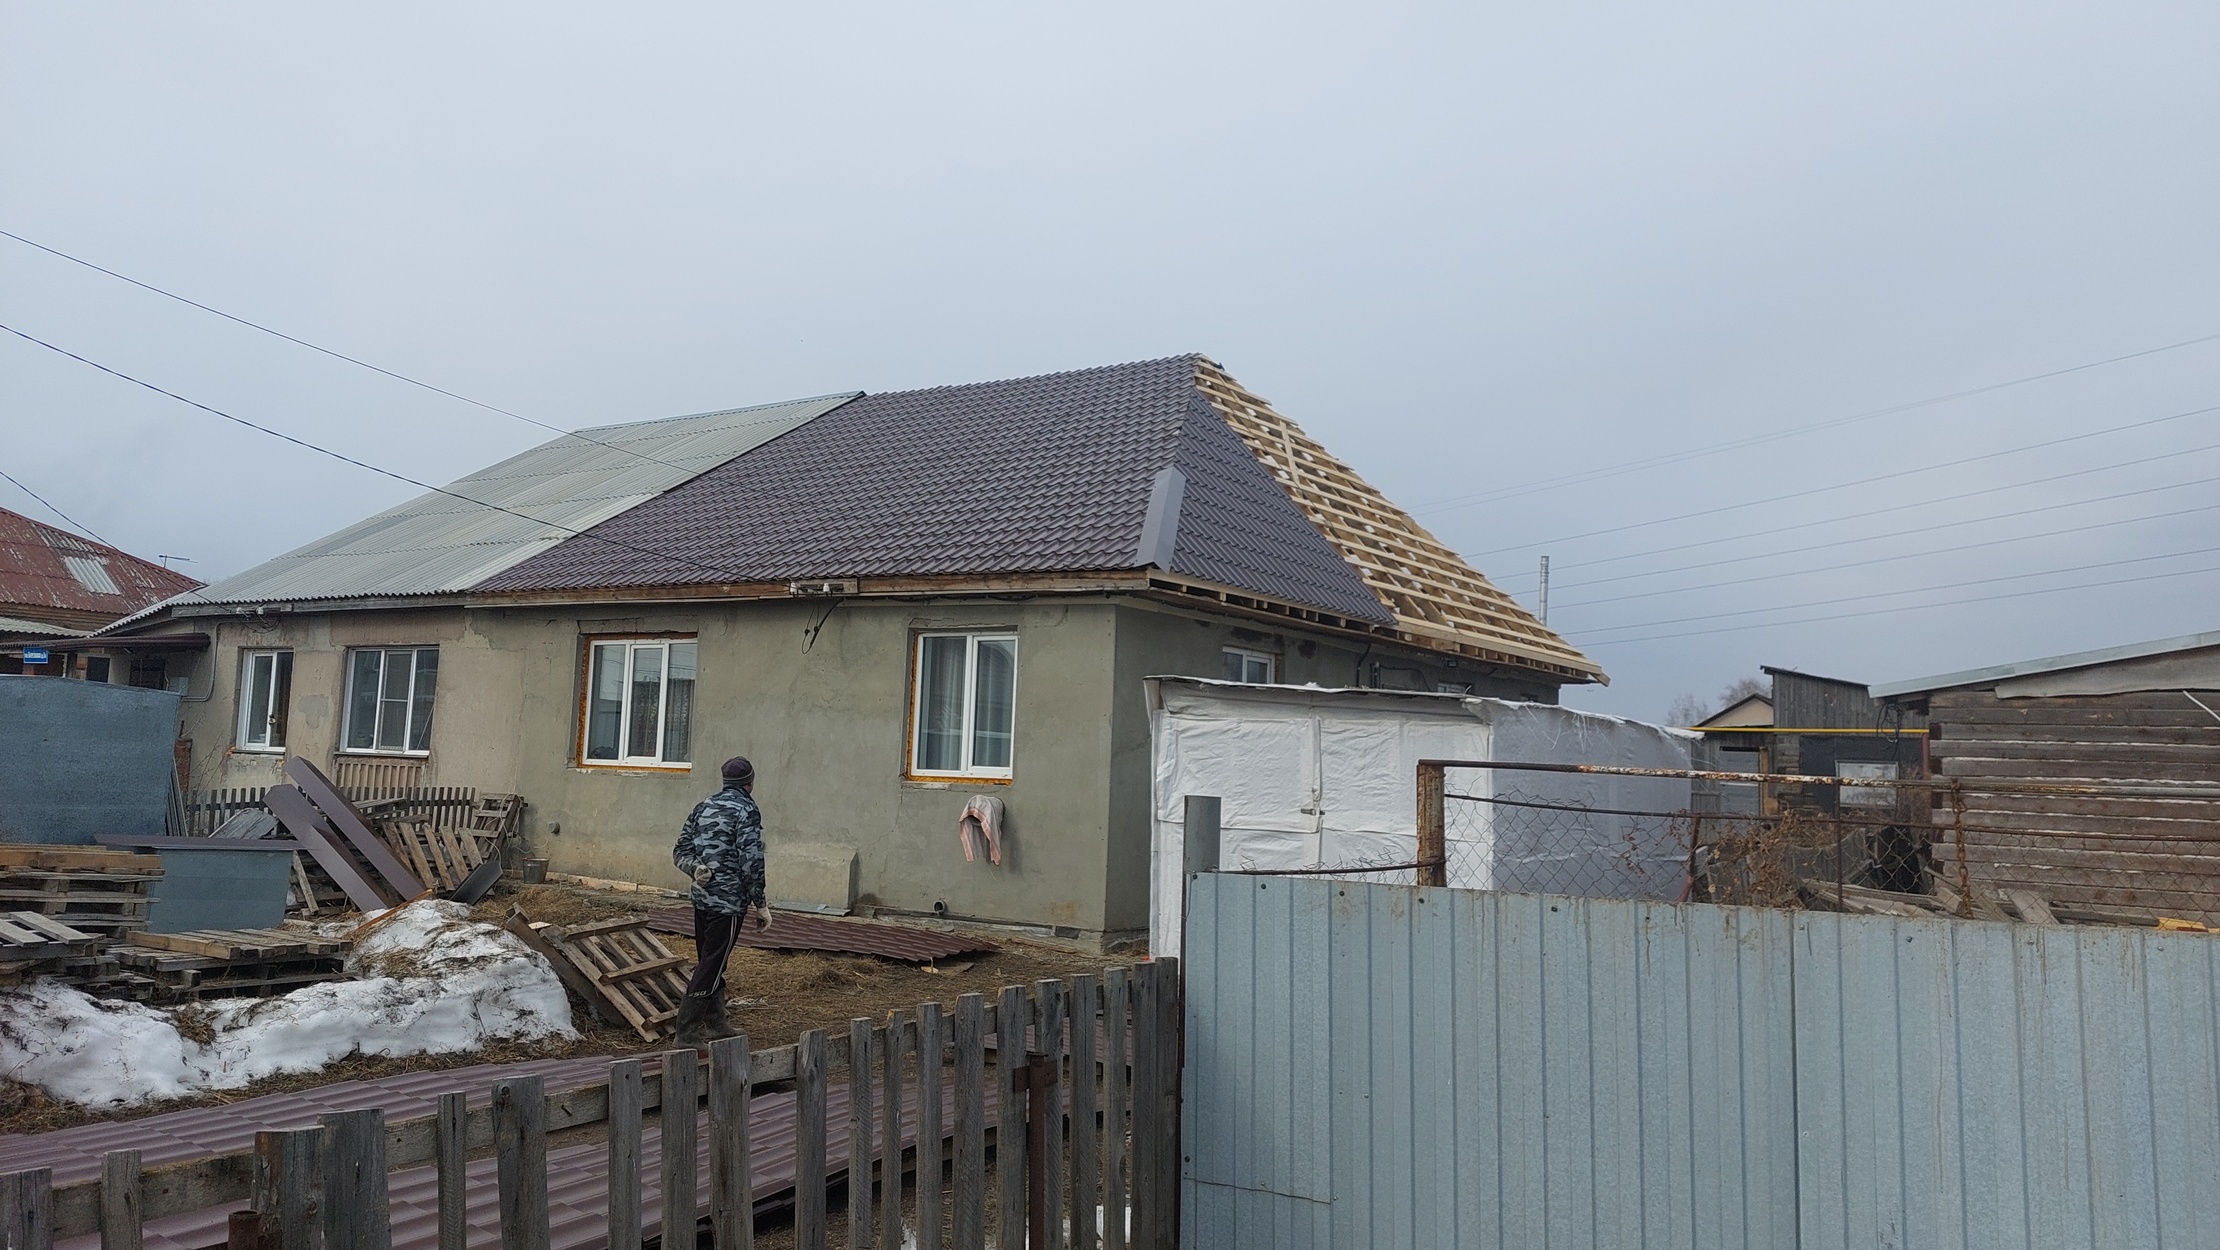 Дом на крыше. Как поменять крышу на доме. Замена крыши дома цены